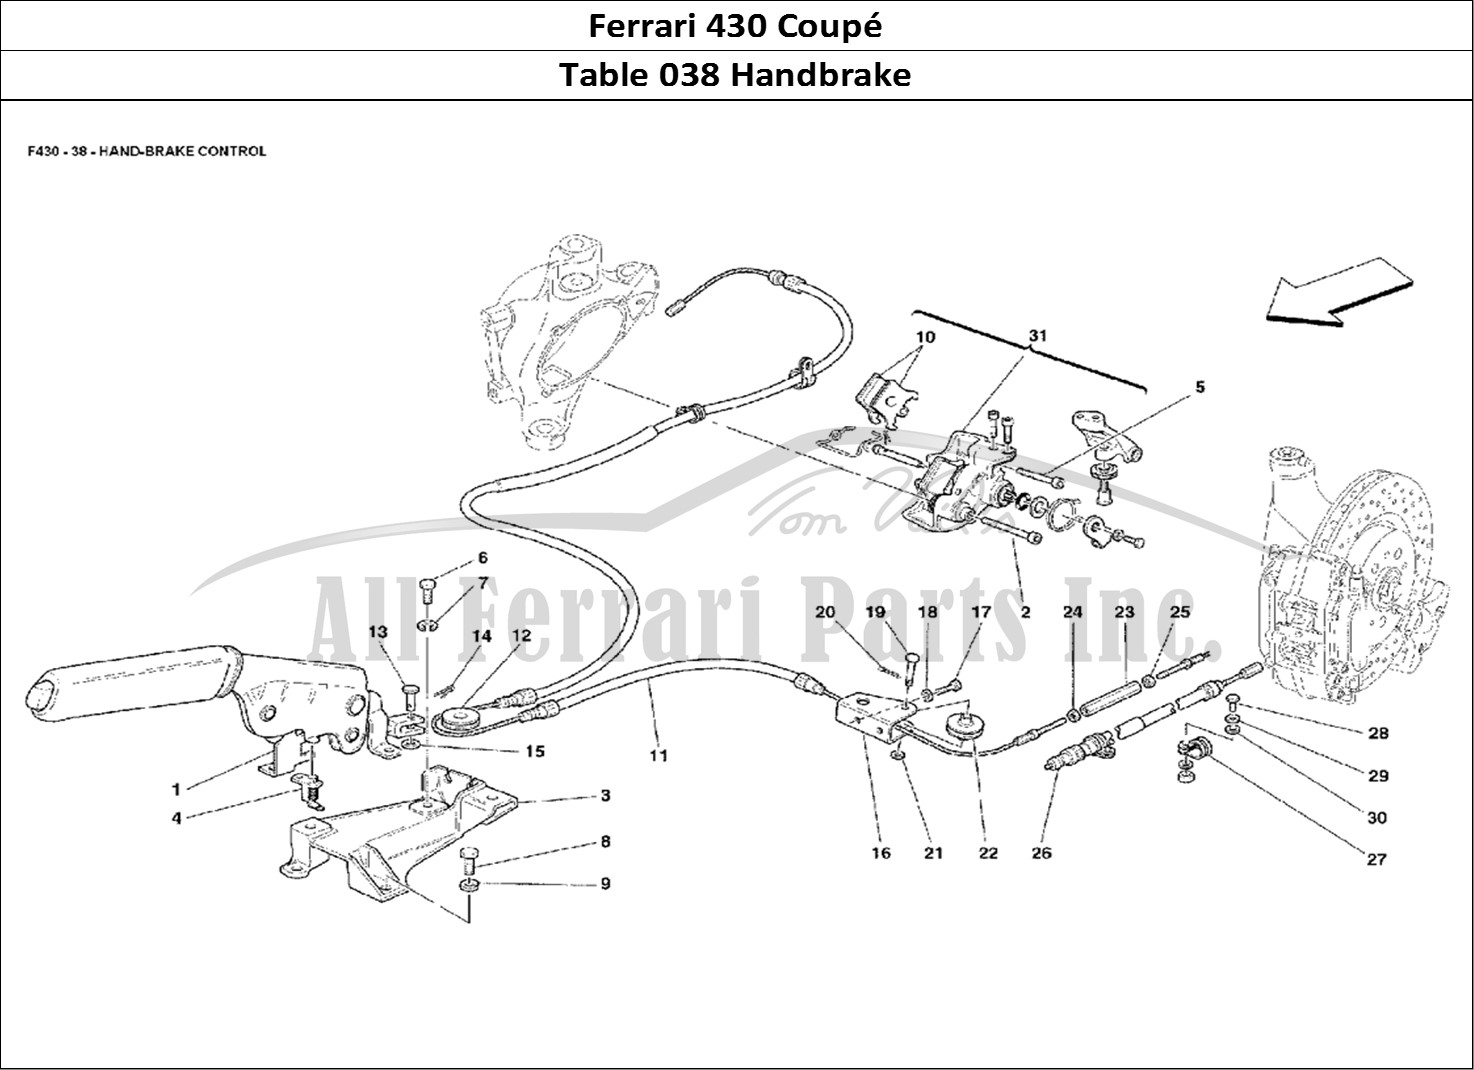 Ferrari Parts Ferrari 430 Coup Page 038 Hand-Brake Control